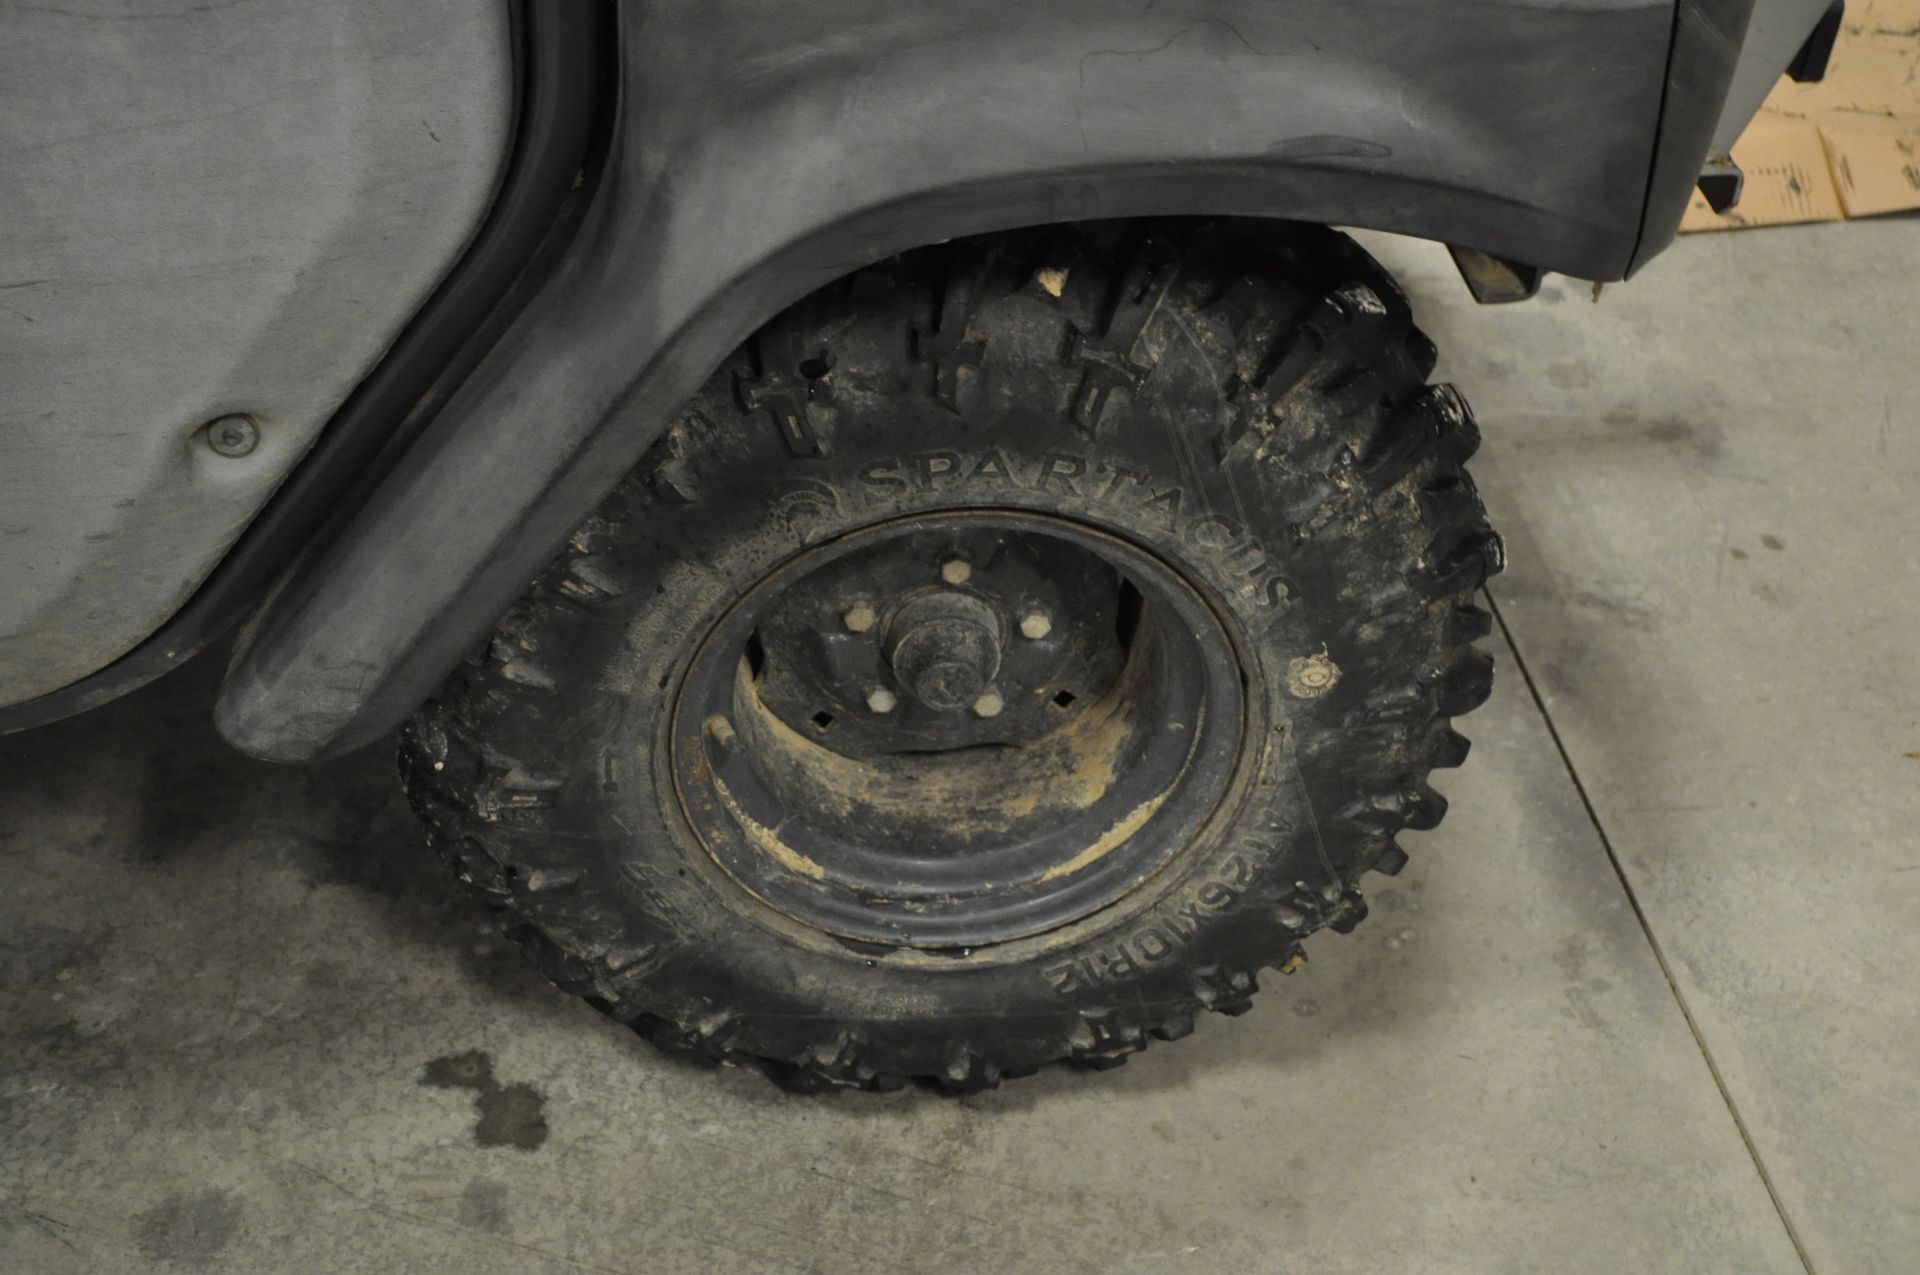 Kubota RTV 1100, 26x12 R 12 tires, C/H/A, radio, 4x4, hyd dump bed, 1070 hrs - Image 8 of 23